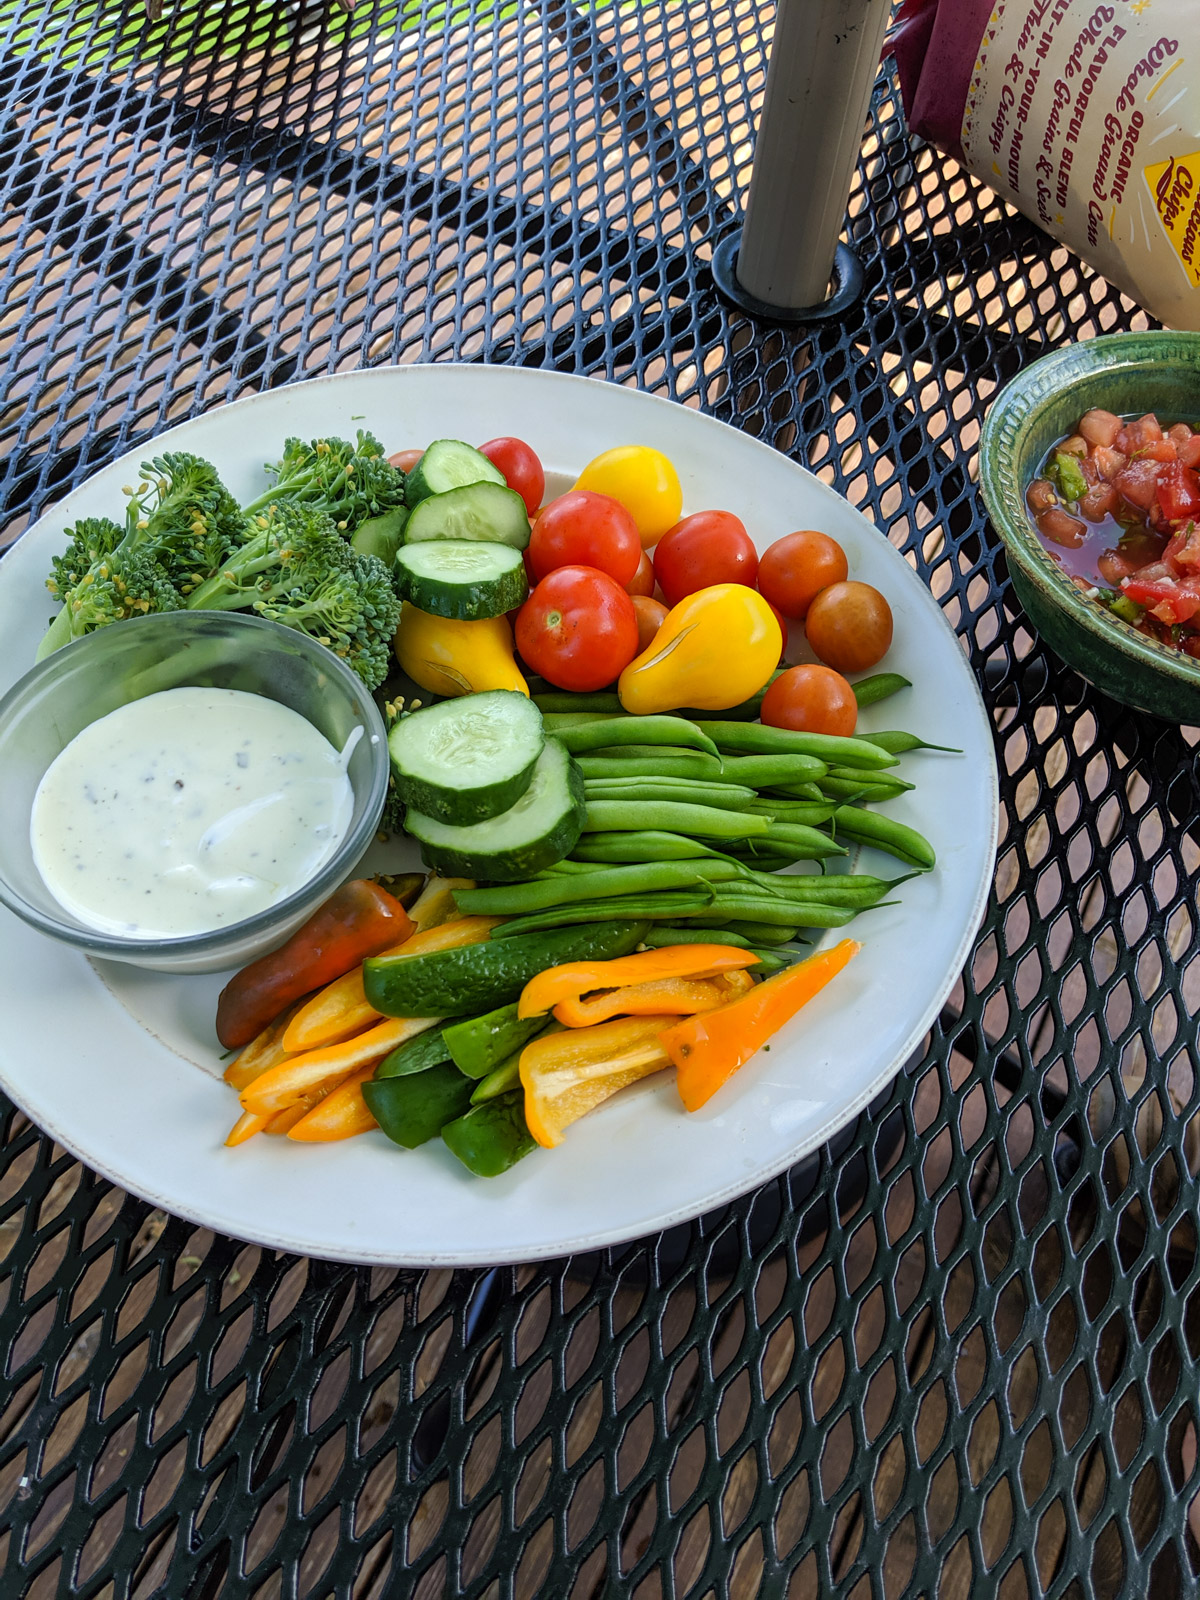 Garden fresh snack, veggies and dip.